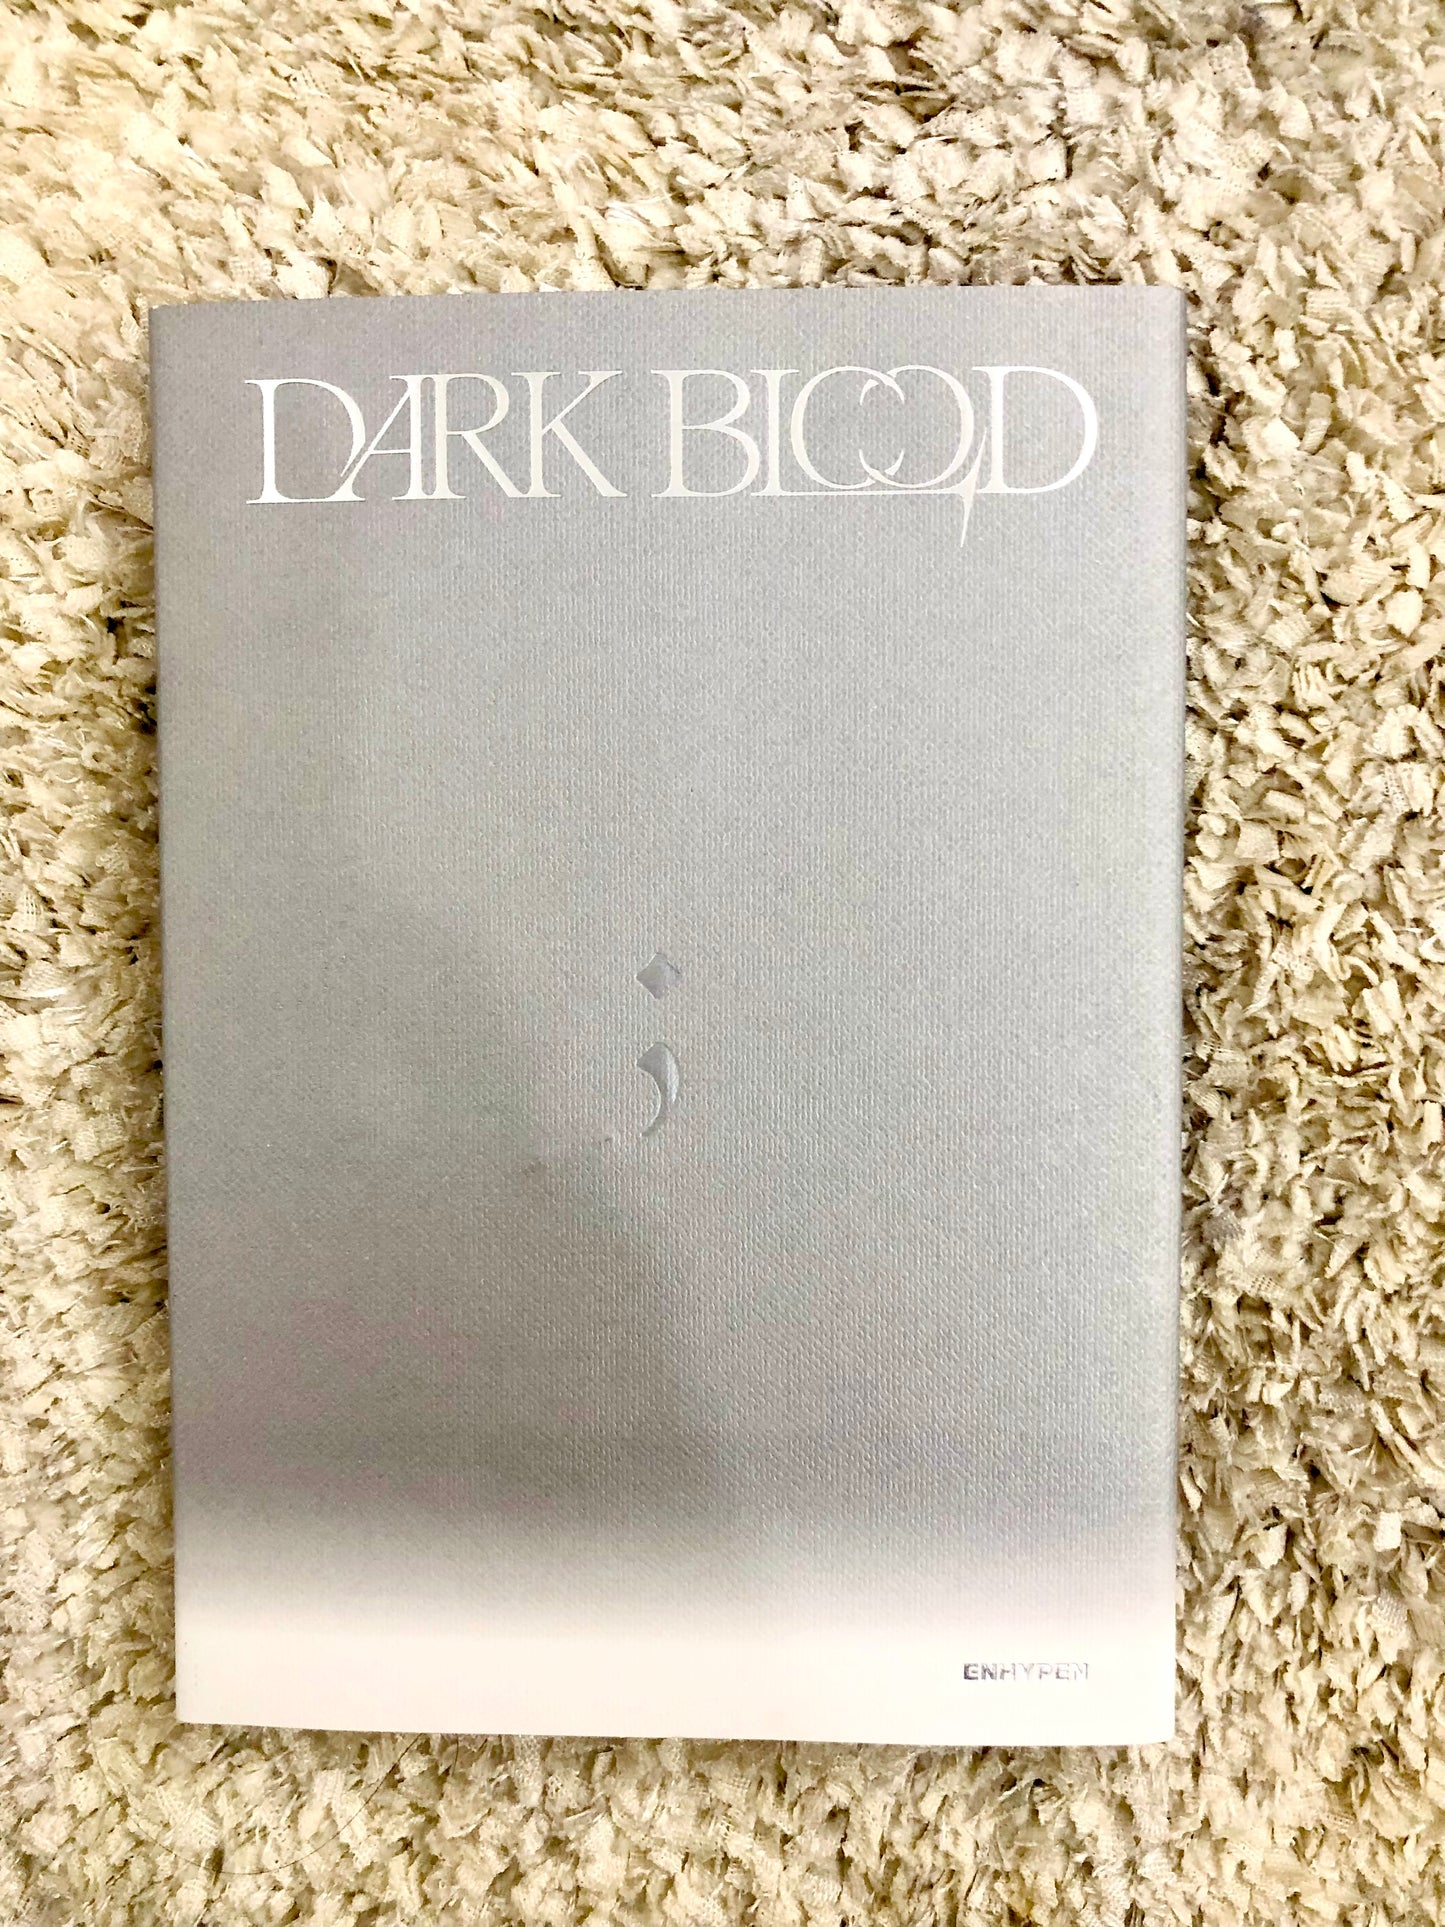 Dark Blood Official Album (Engene Niki Version)